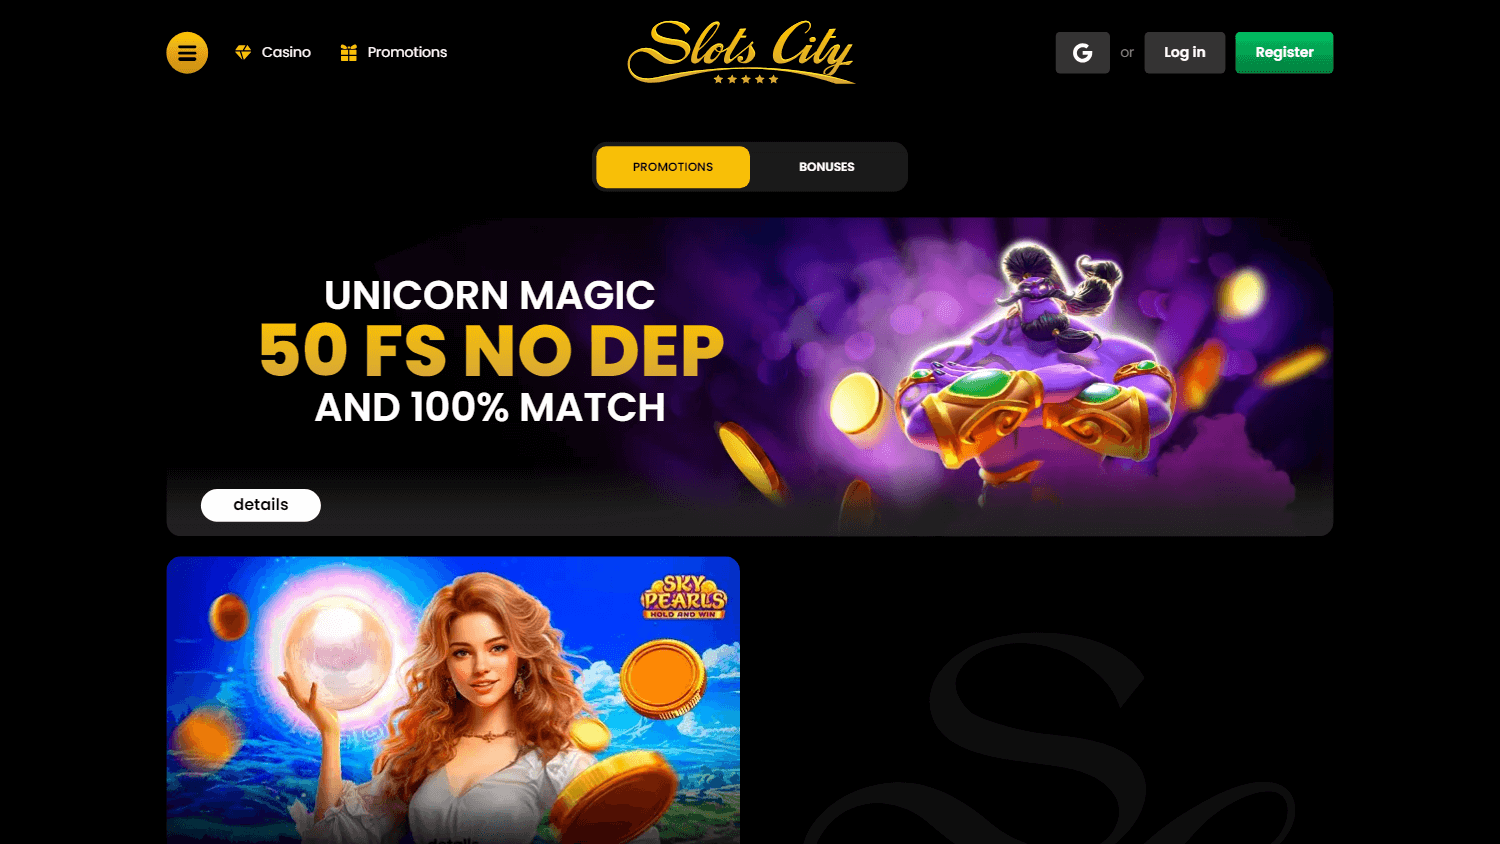 slots_city_casino_promotions_desktop